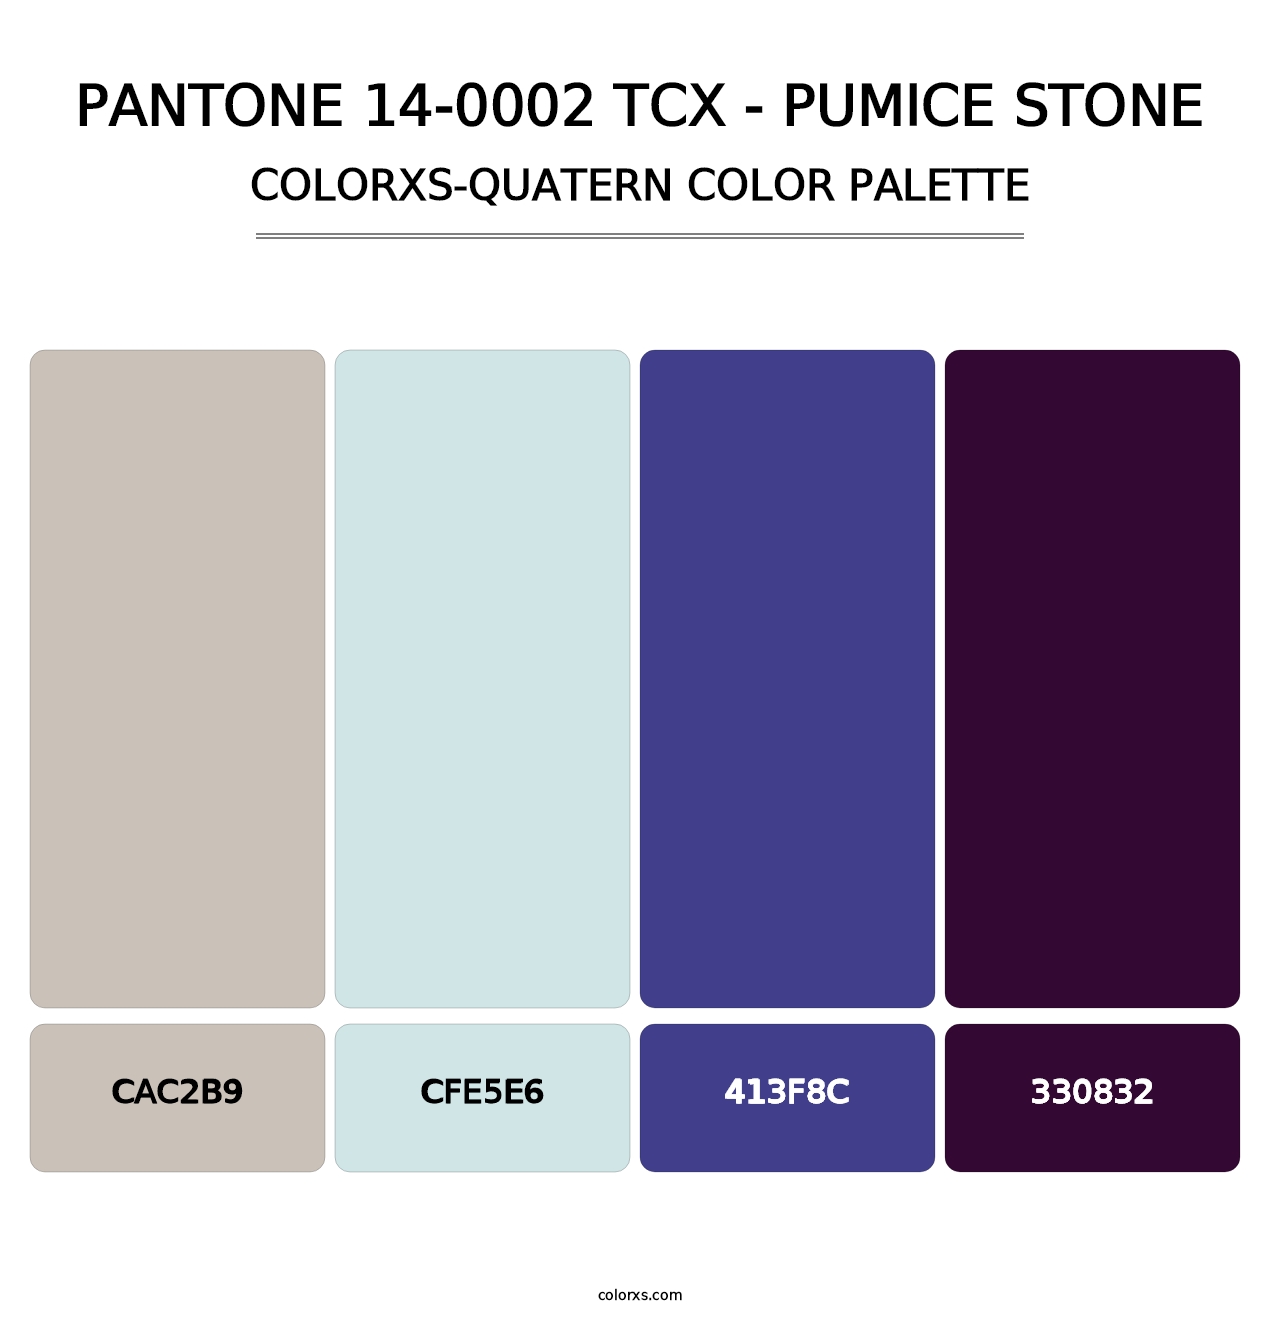 PANTONE 14-0002 TCX - Pumice Stone - Colorxs Quatern Palette